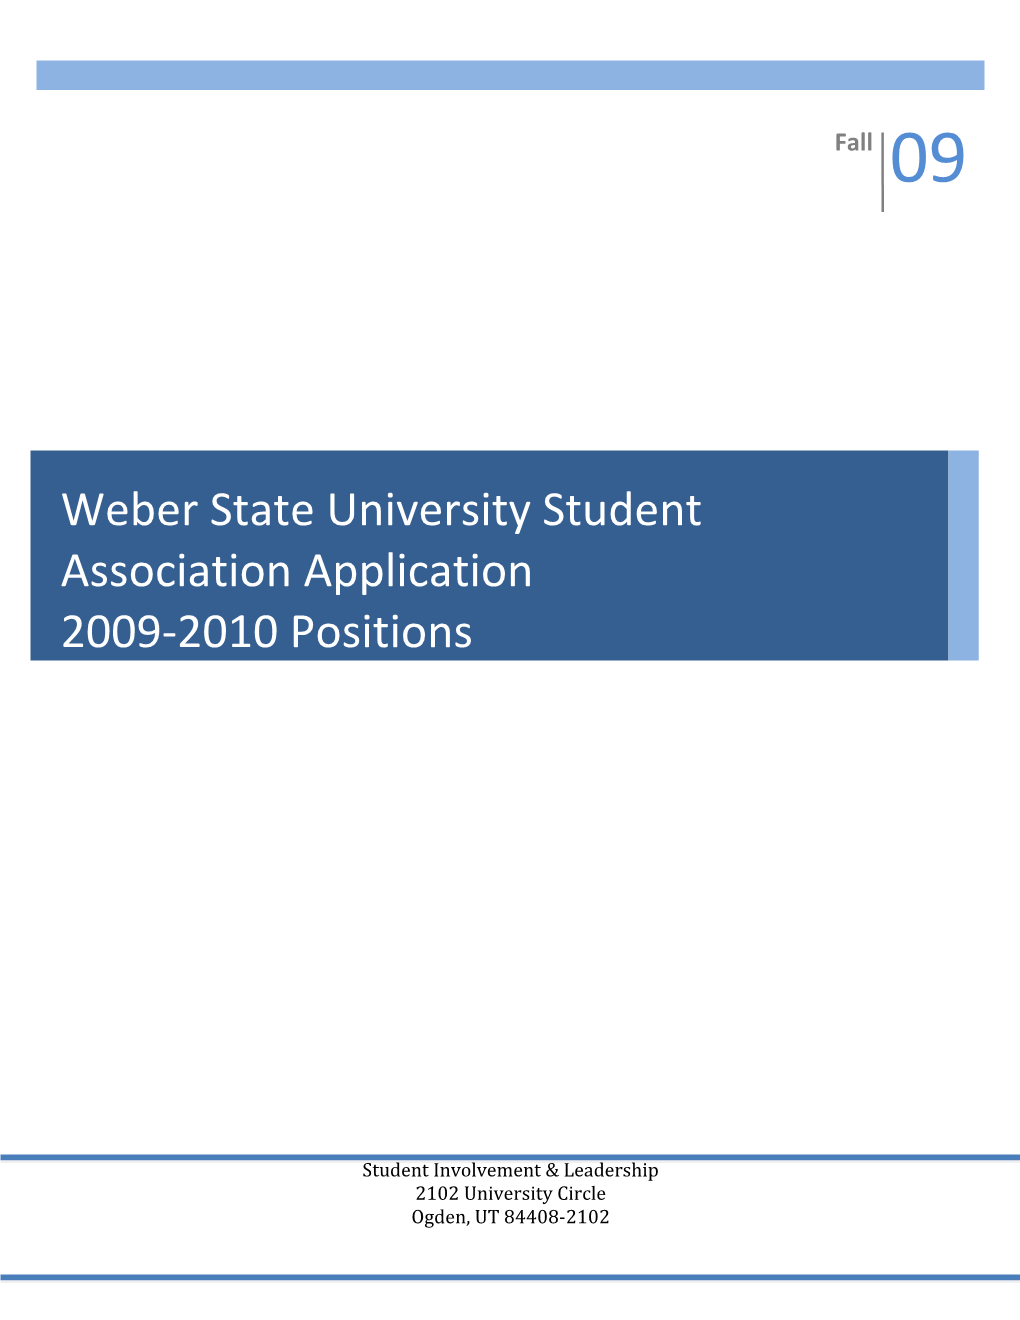 Weber State University Student Association Application 2009-2010 Positions